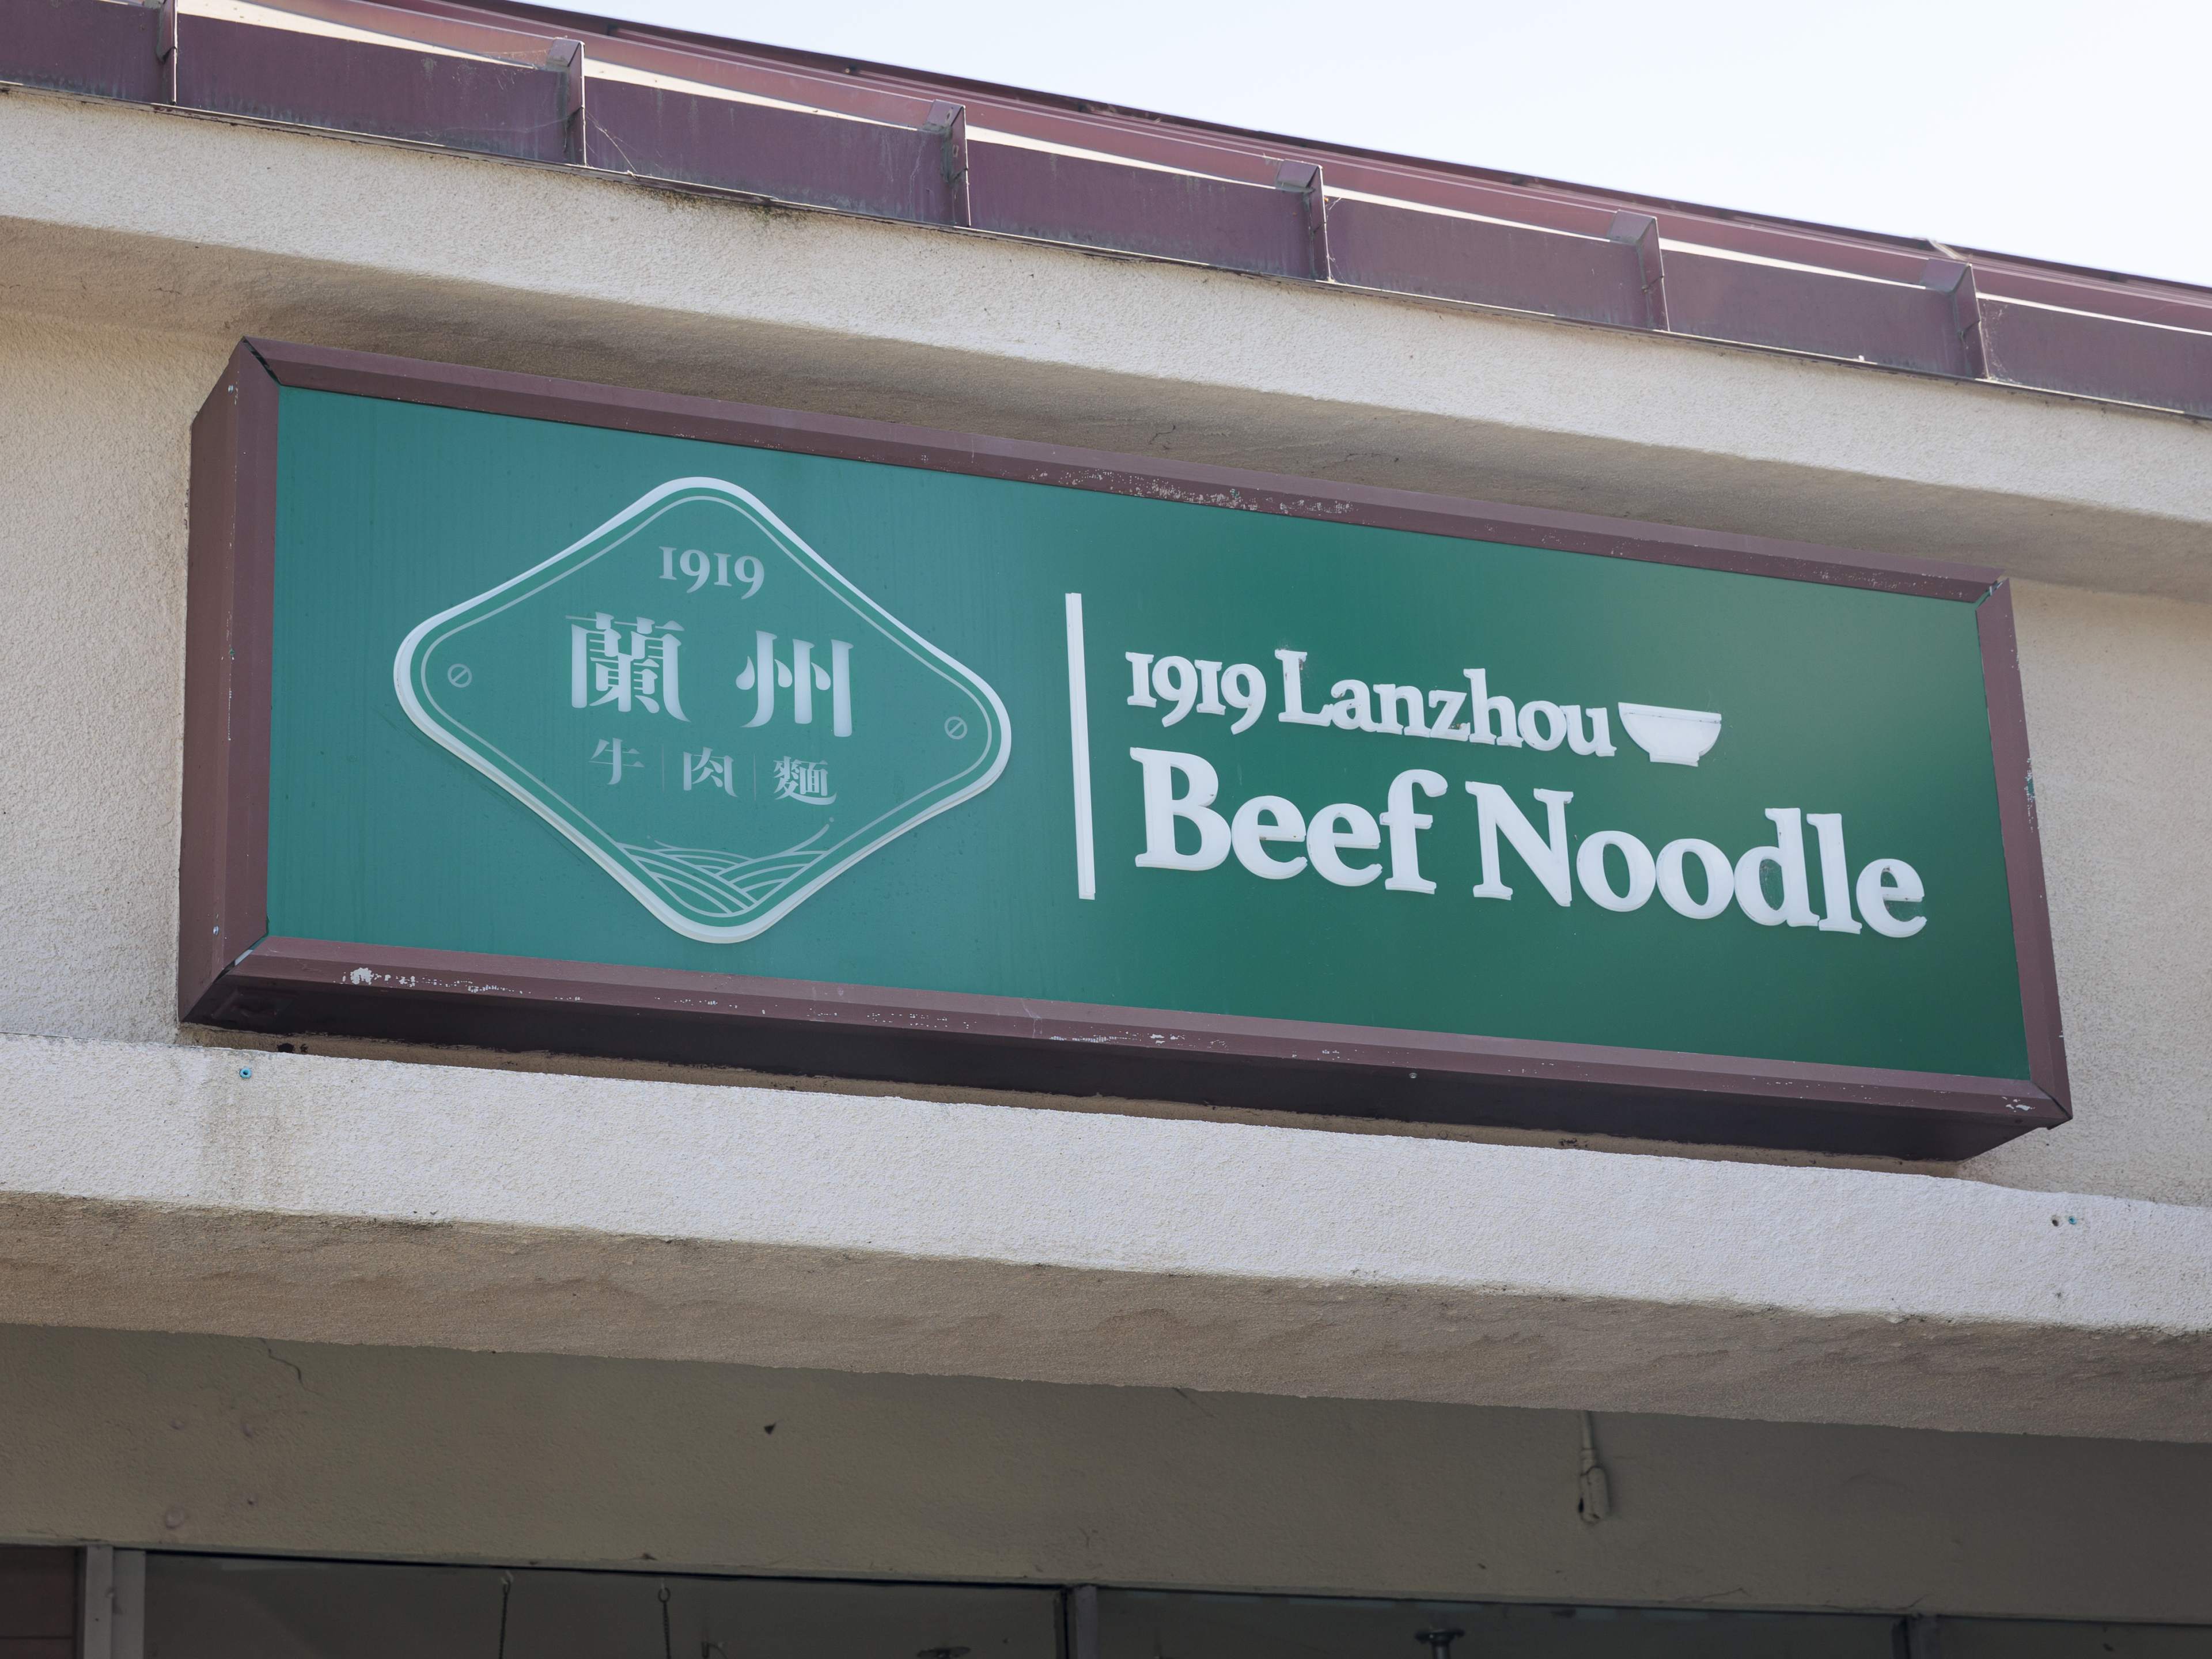 1919 Lanzhou Beef Noodle signage